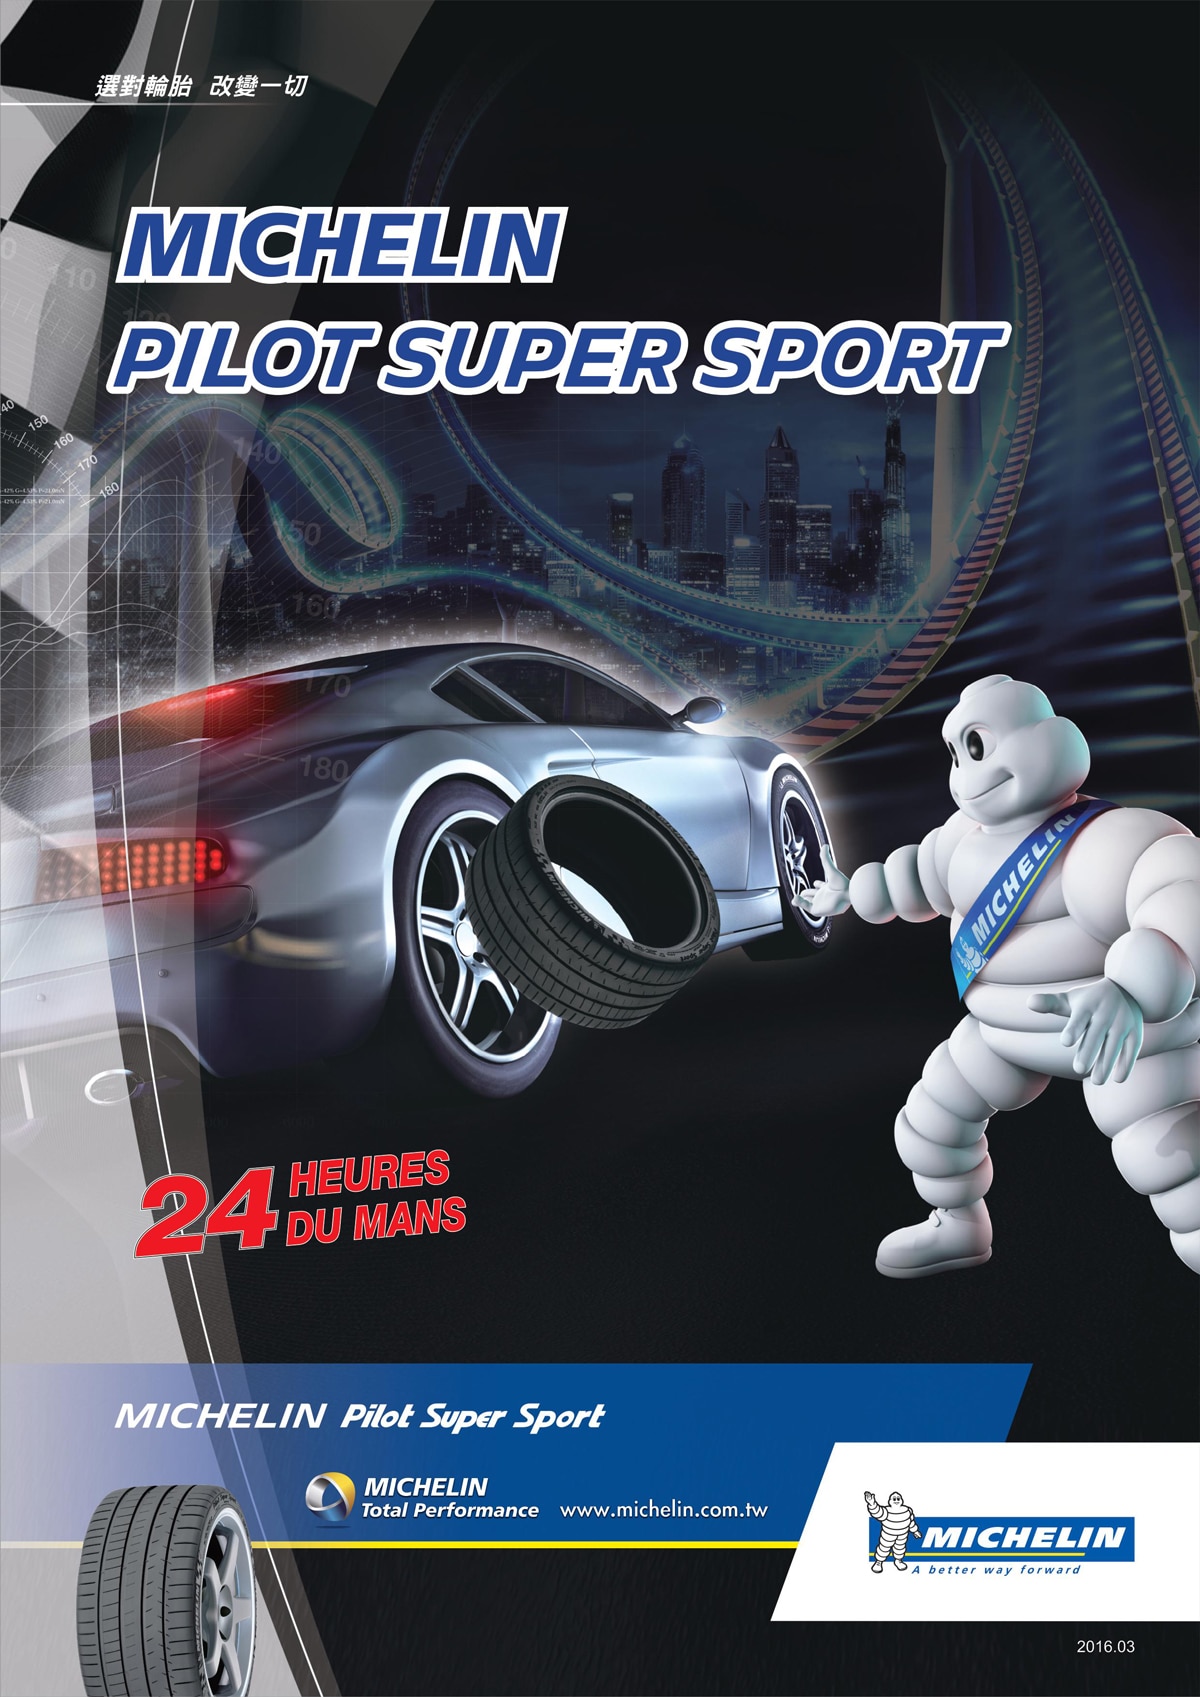 Michelin PILOTSUPERSPORT為24 heures du mans(利曼24小時耐力賽)合作品牌。